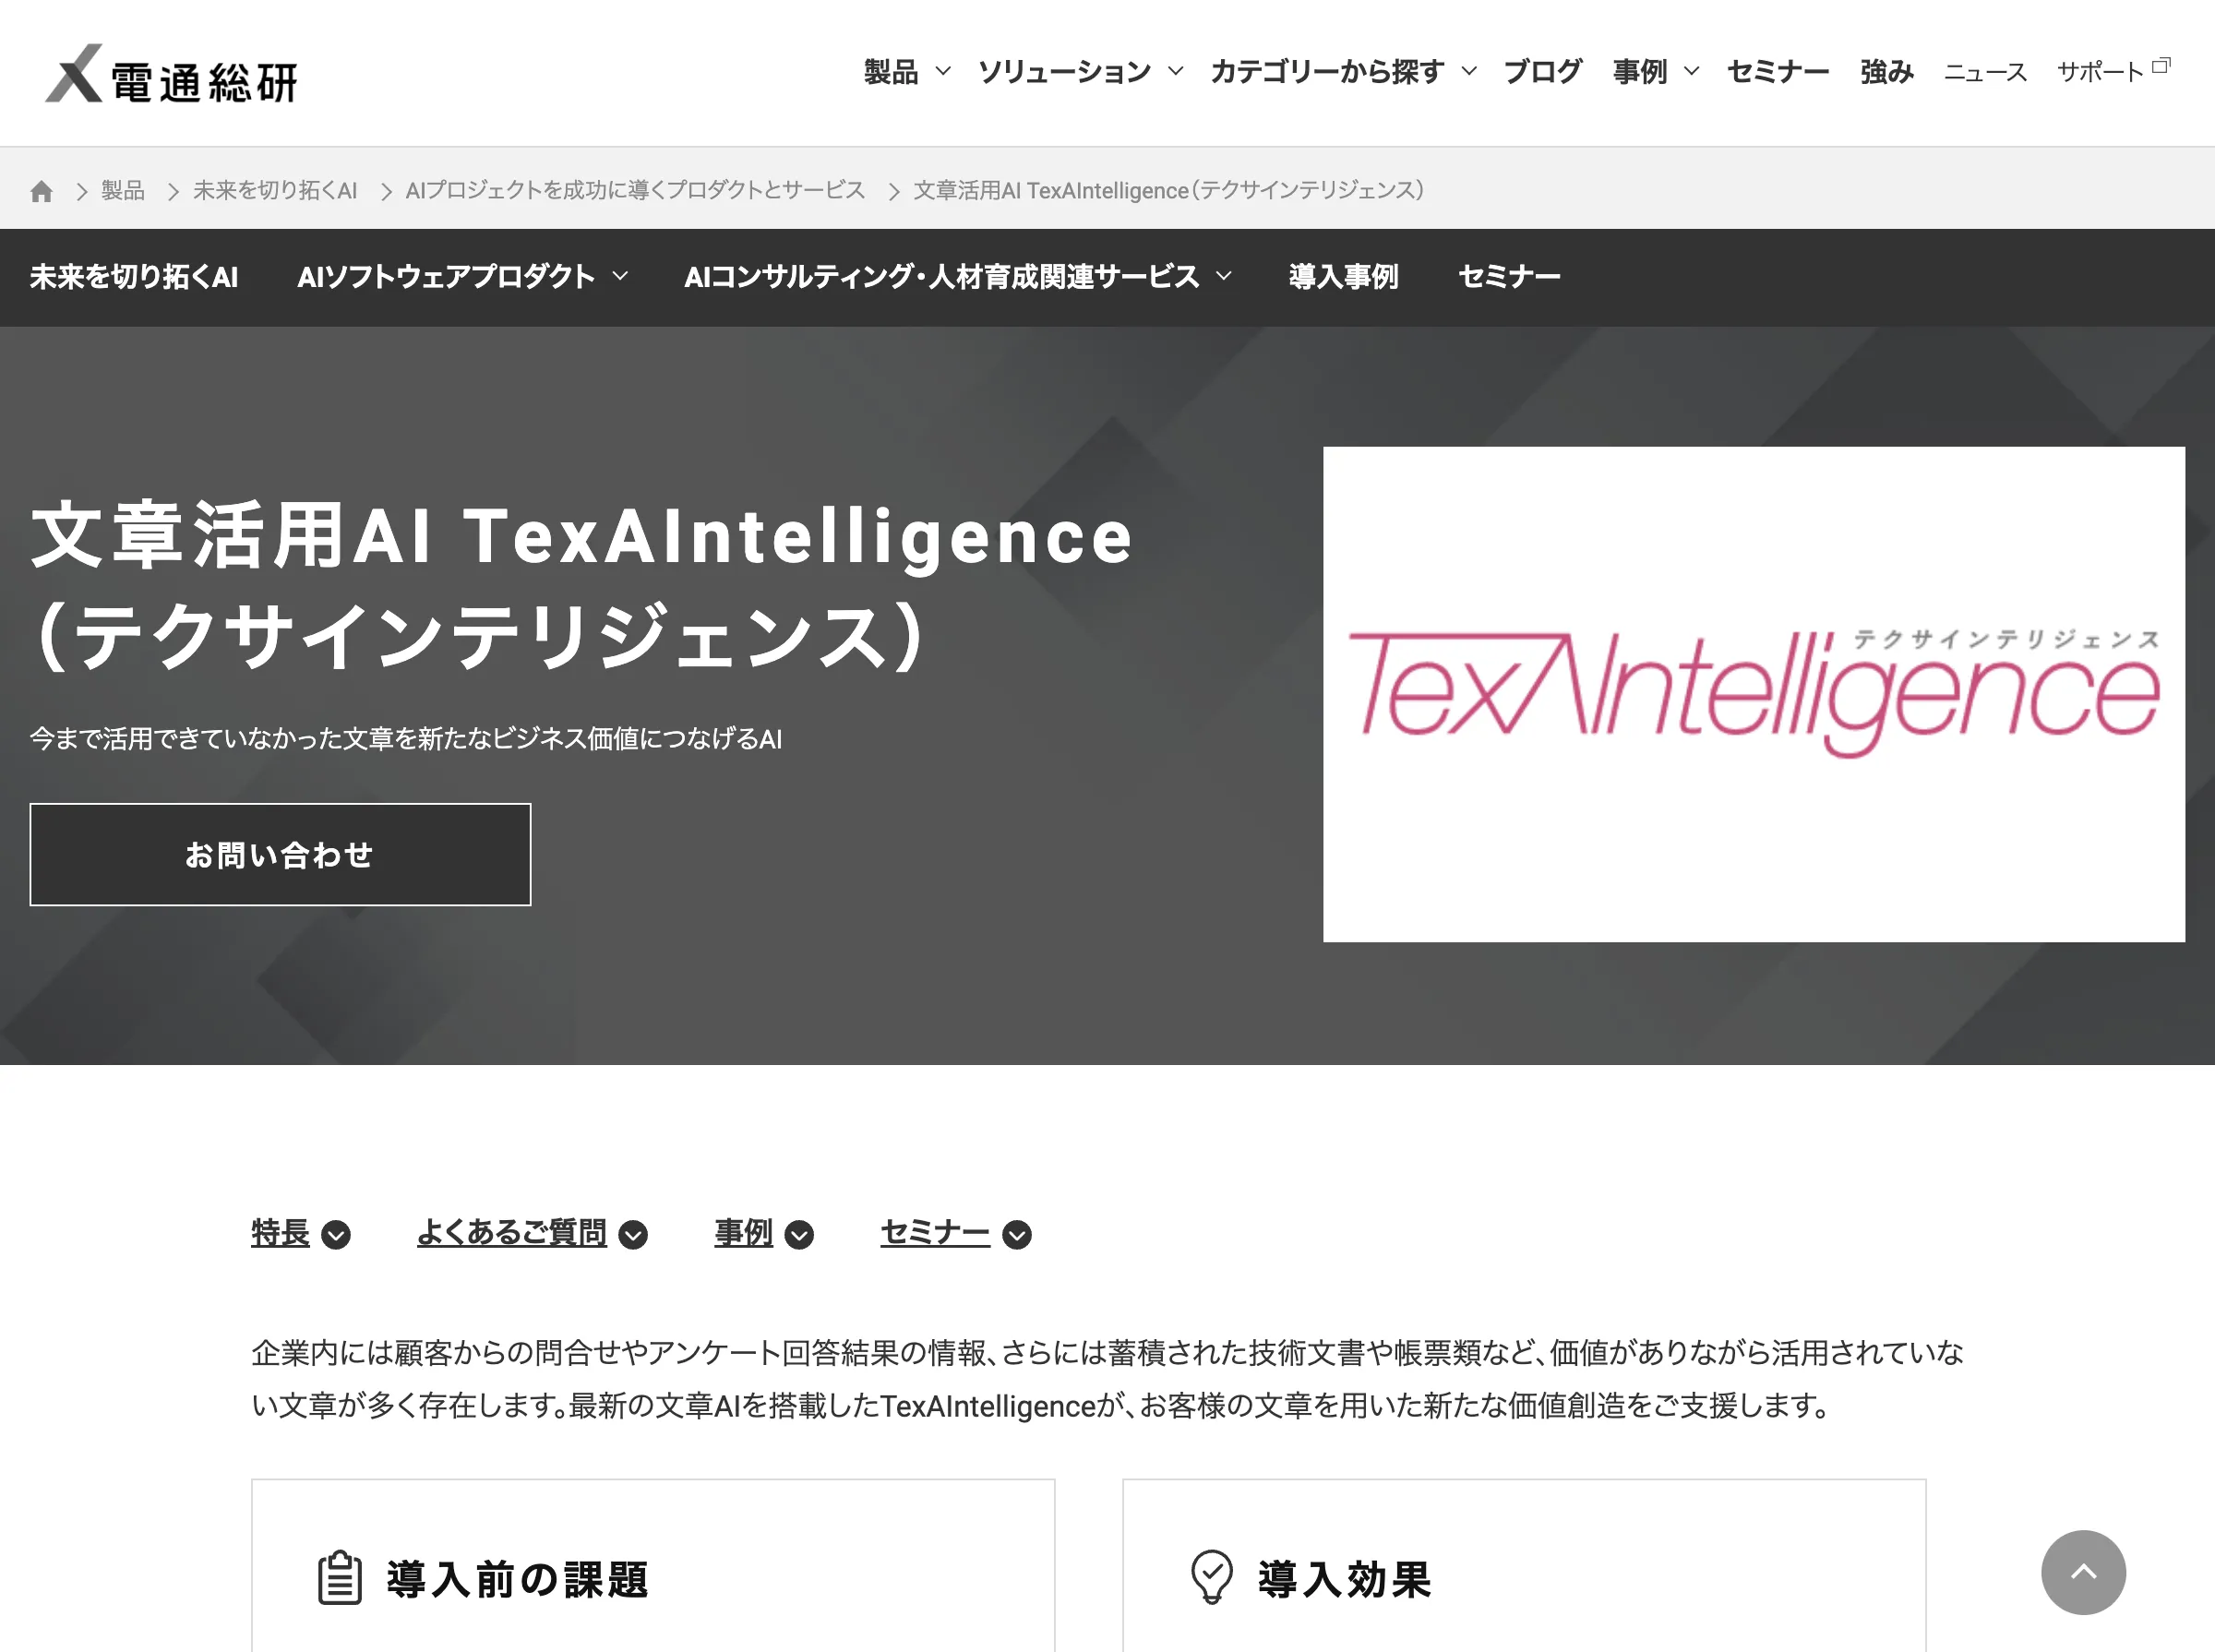 TexAIntelligence(株式会社電通国際情報サービス)